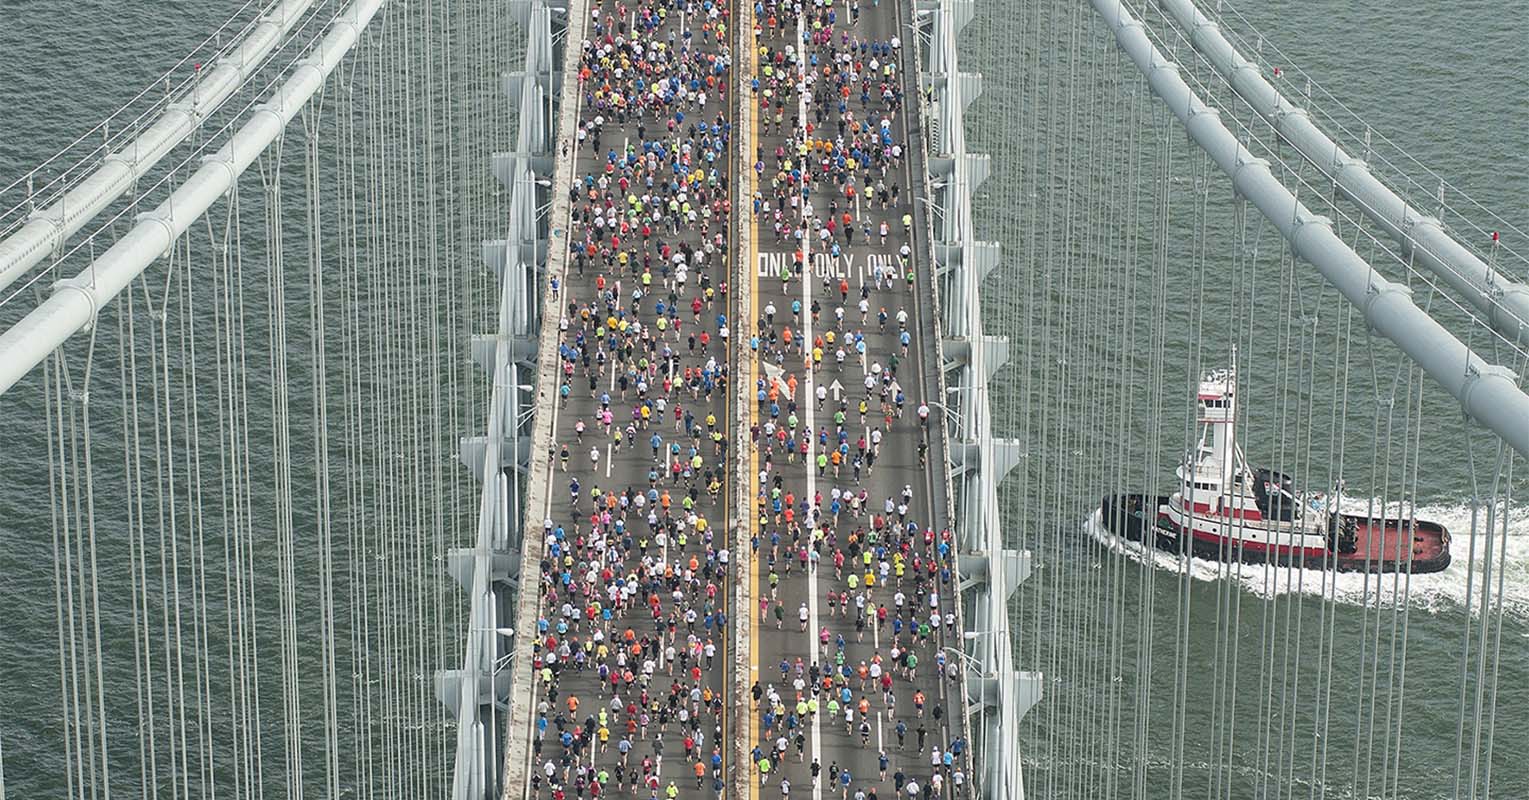 New York City marathon